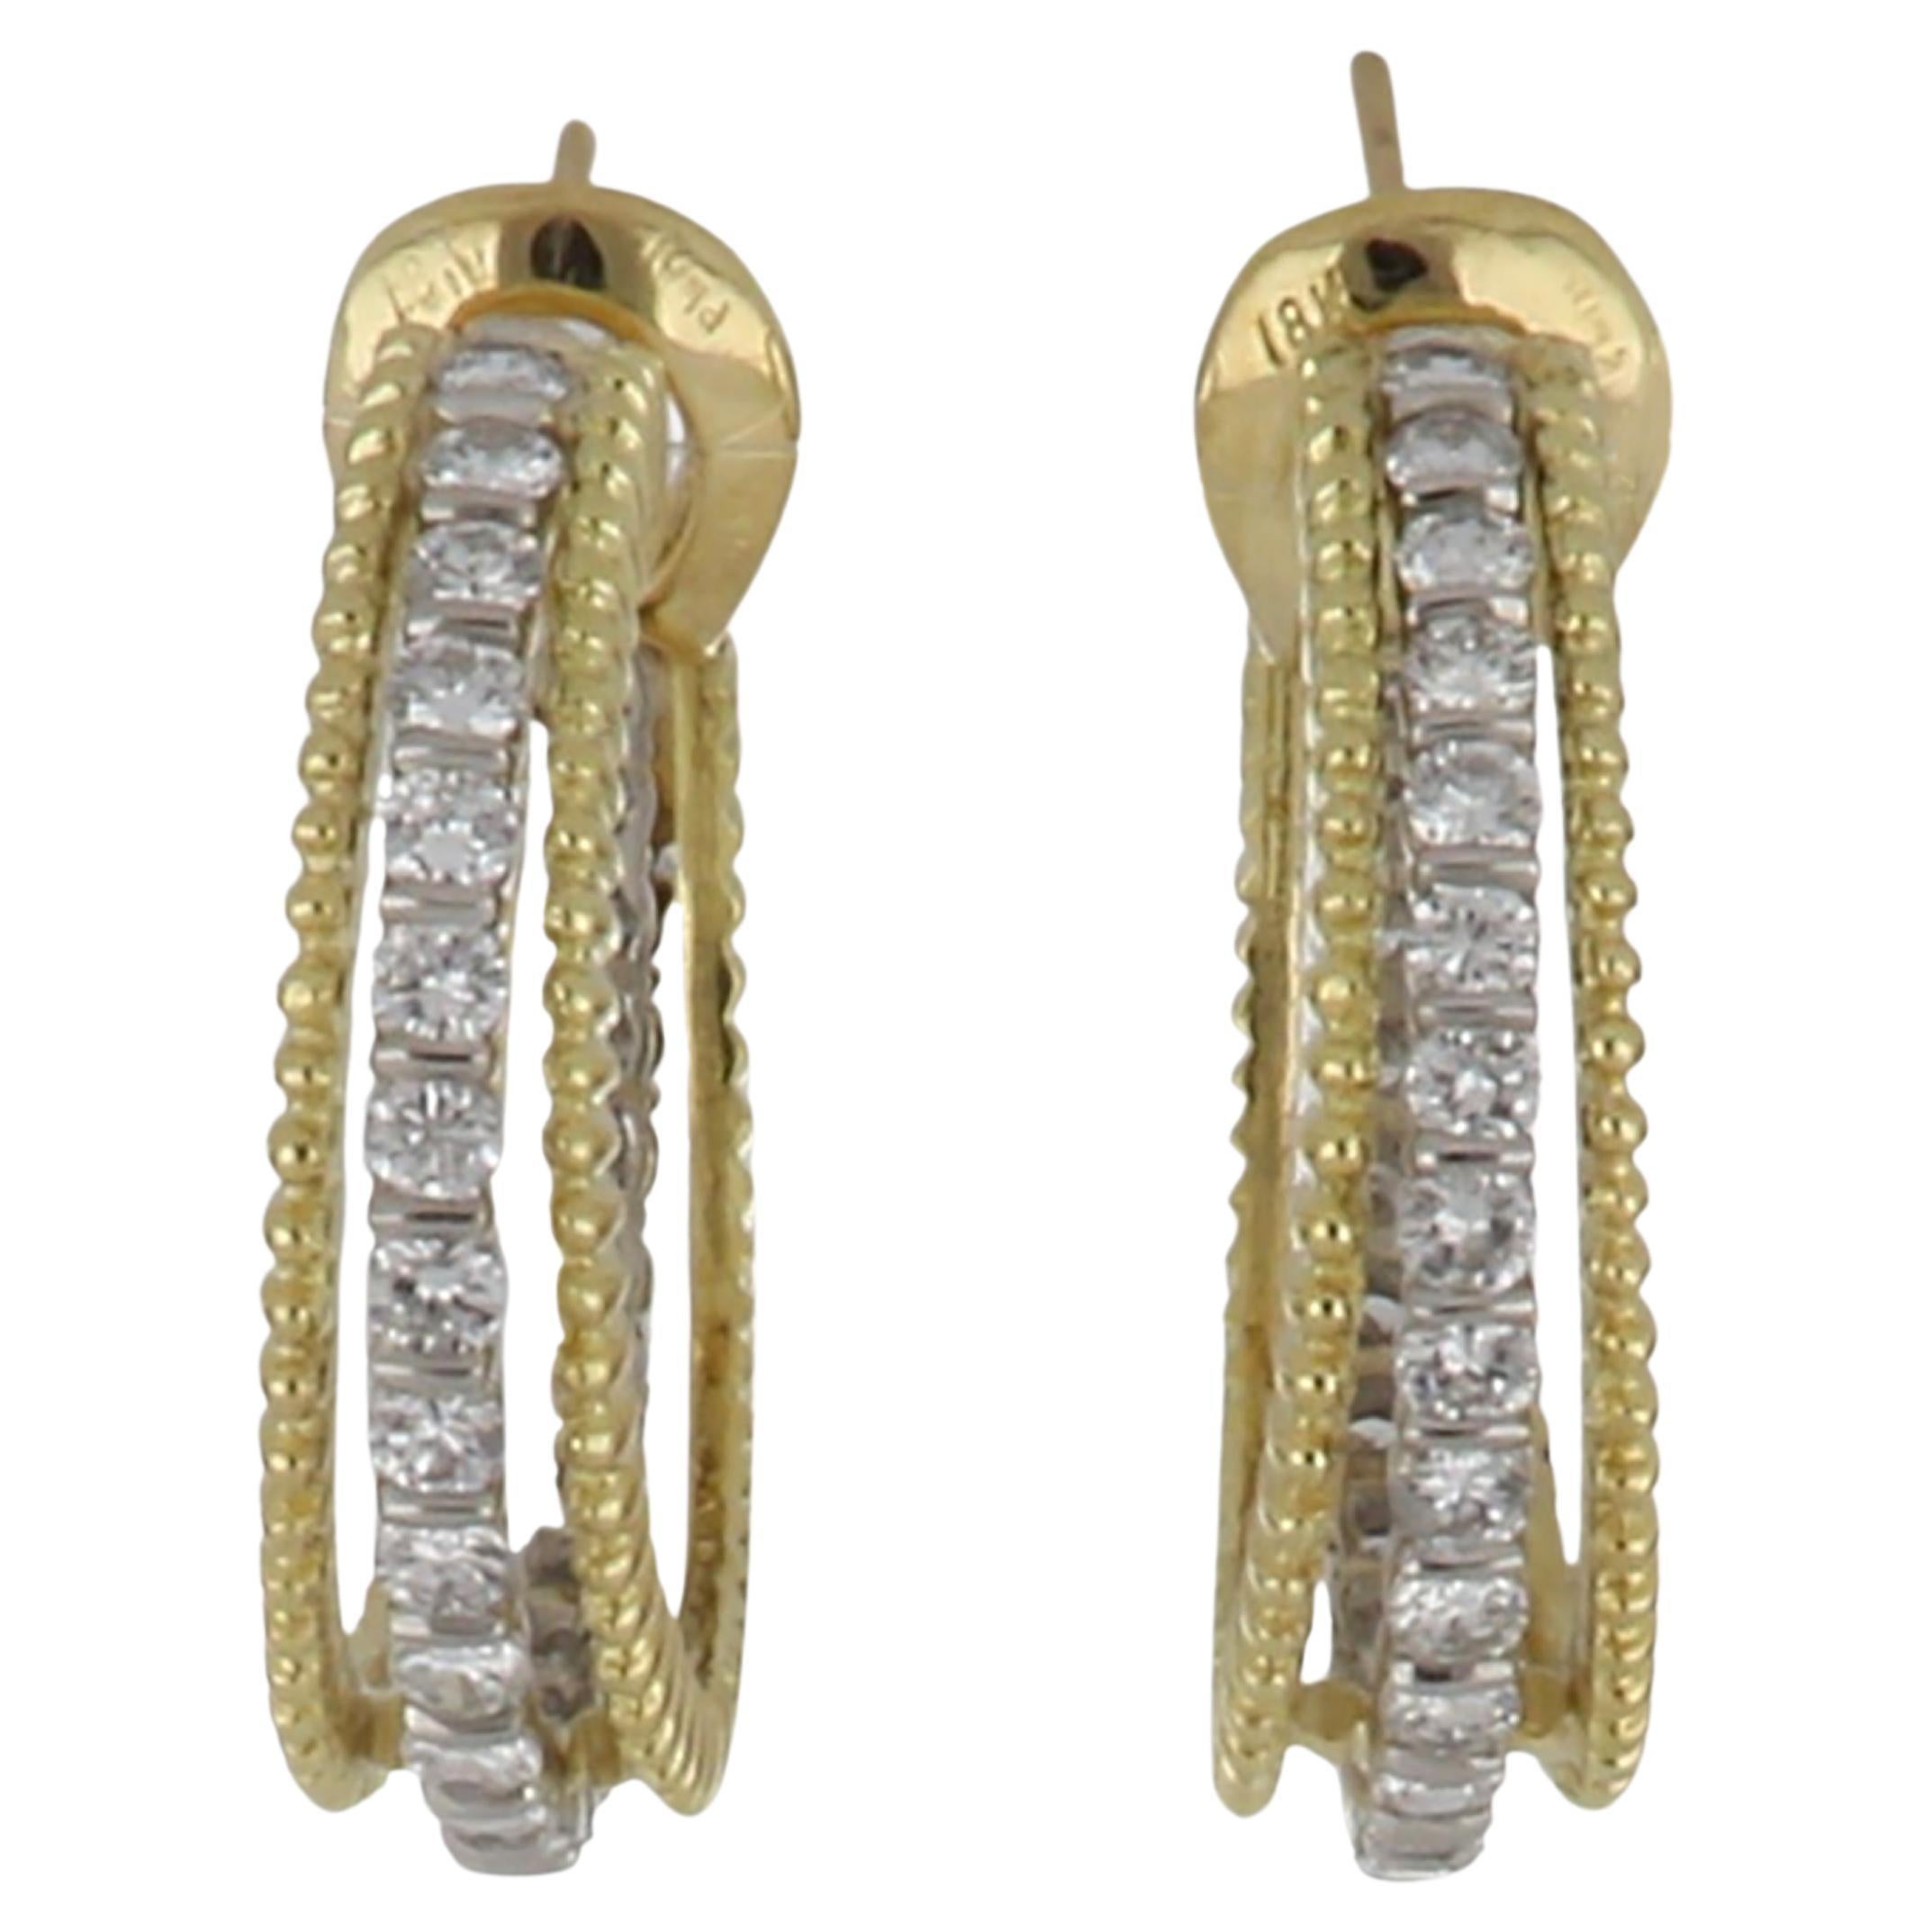 Vintage 1970s Tiffany & Co. Diamond Hoop Earrings in 18K Gold and Platinum